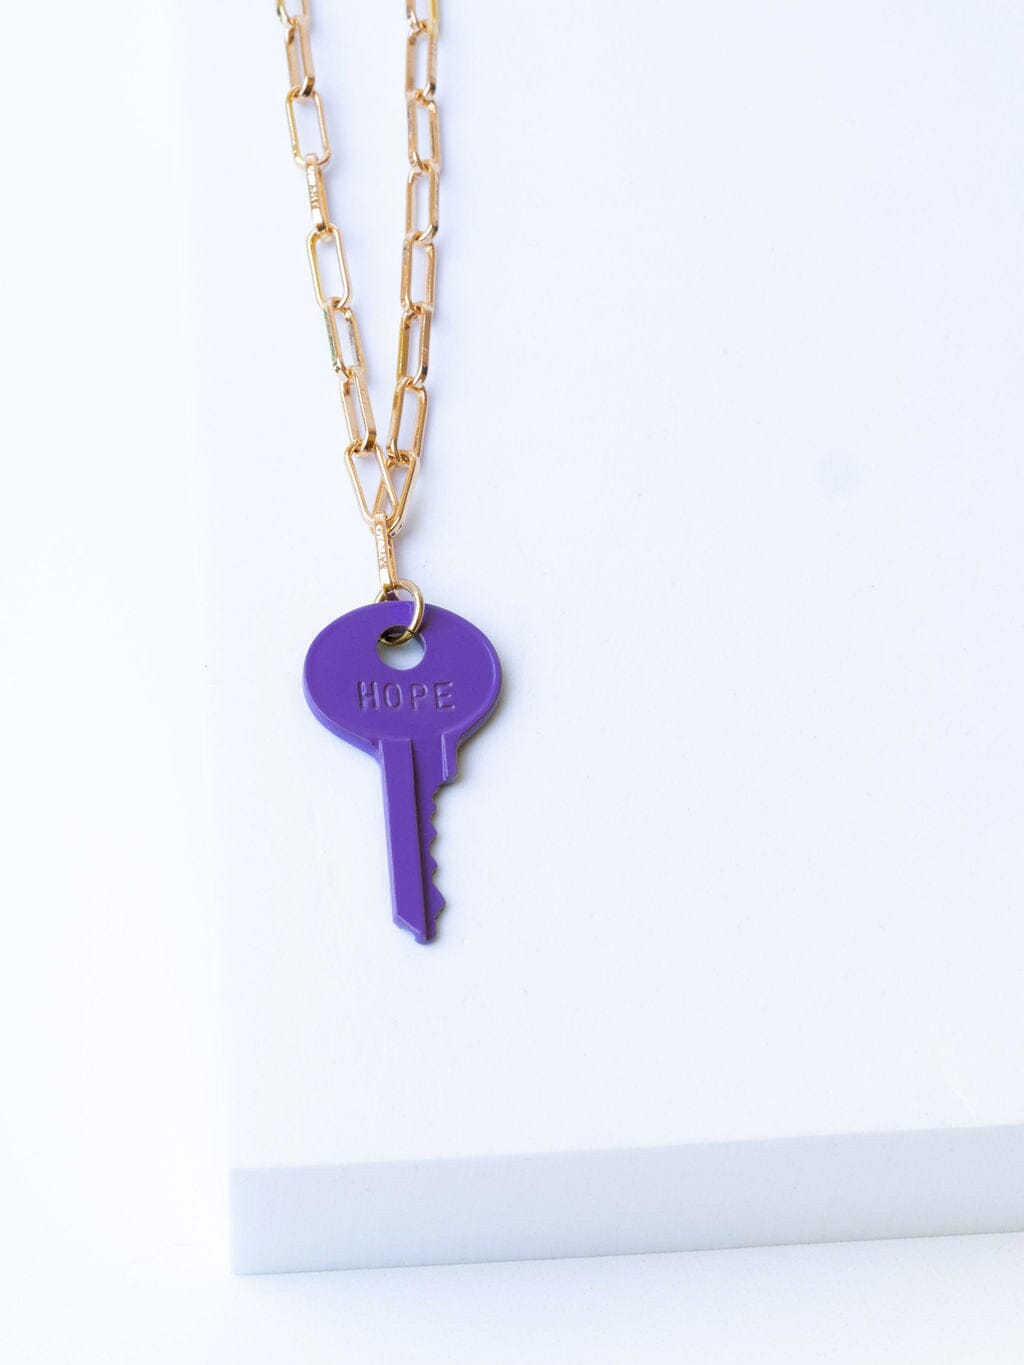 N - Dark Purple Dainty Brooklyn Necklace Necklaces The Giving Keys 